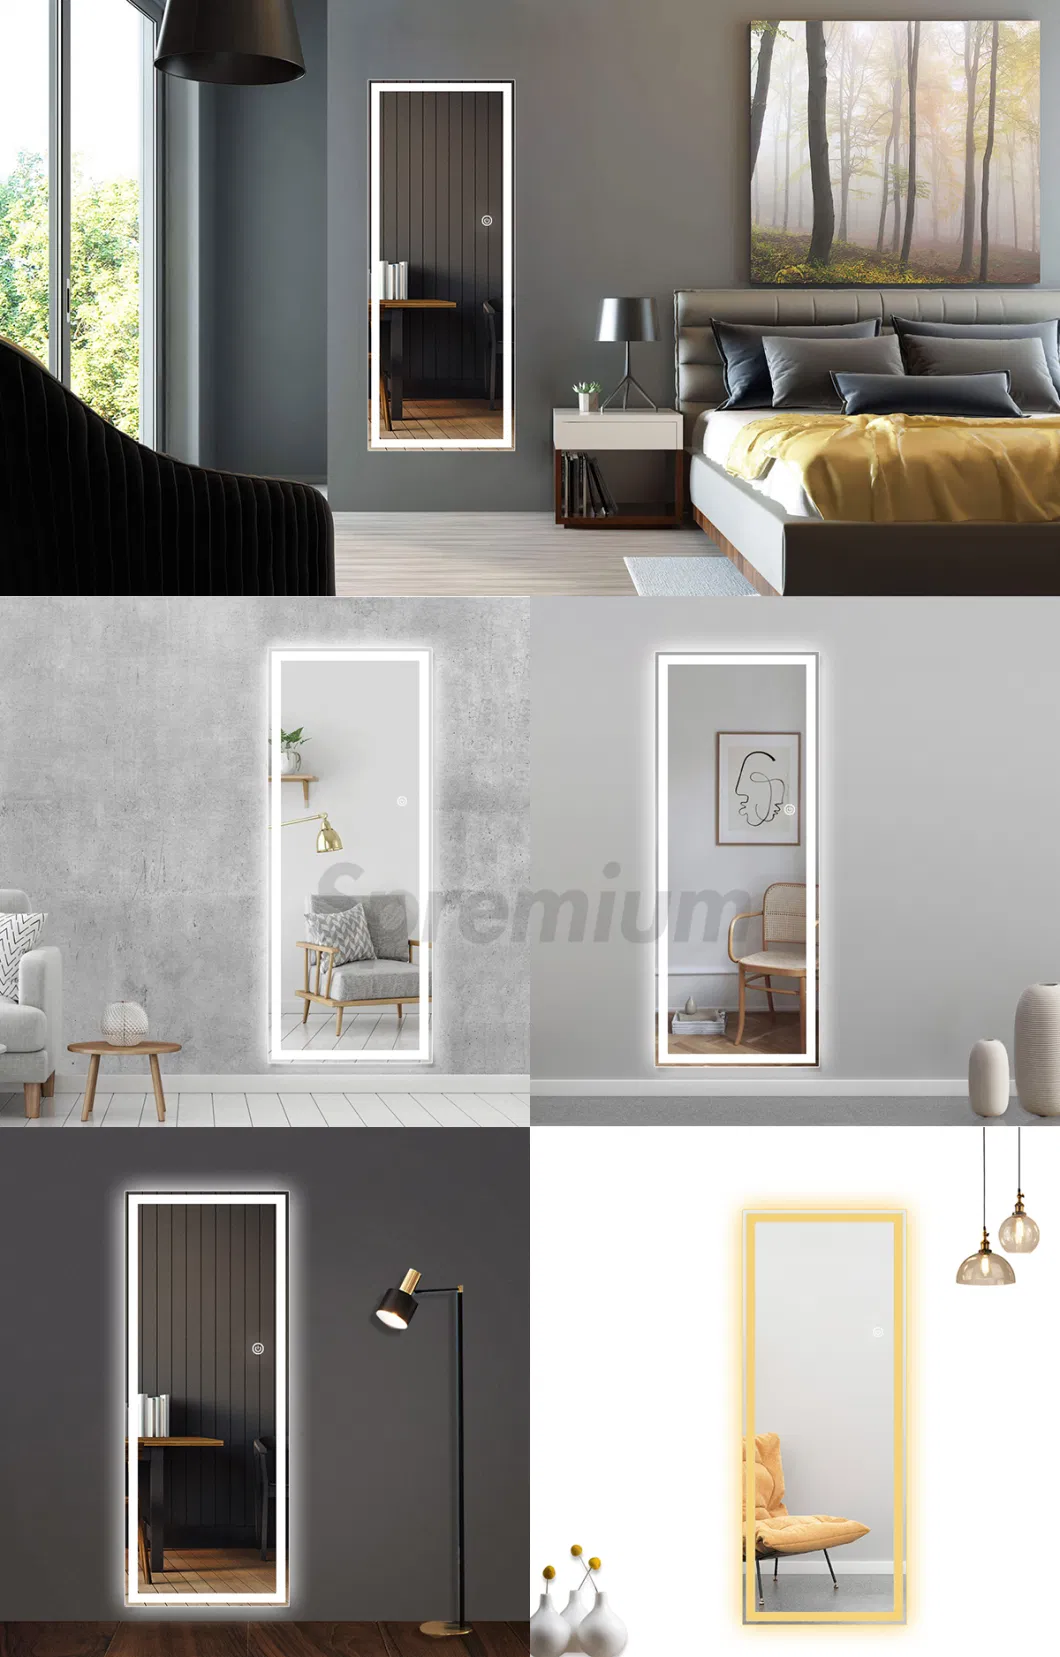 Spremium Wall Hung Decorative Wall Frameless Full Body Length Floor Dressing Mirror LED Lights Touch Sensor Switch Backlit Bedroom